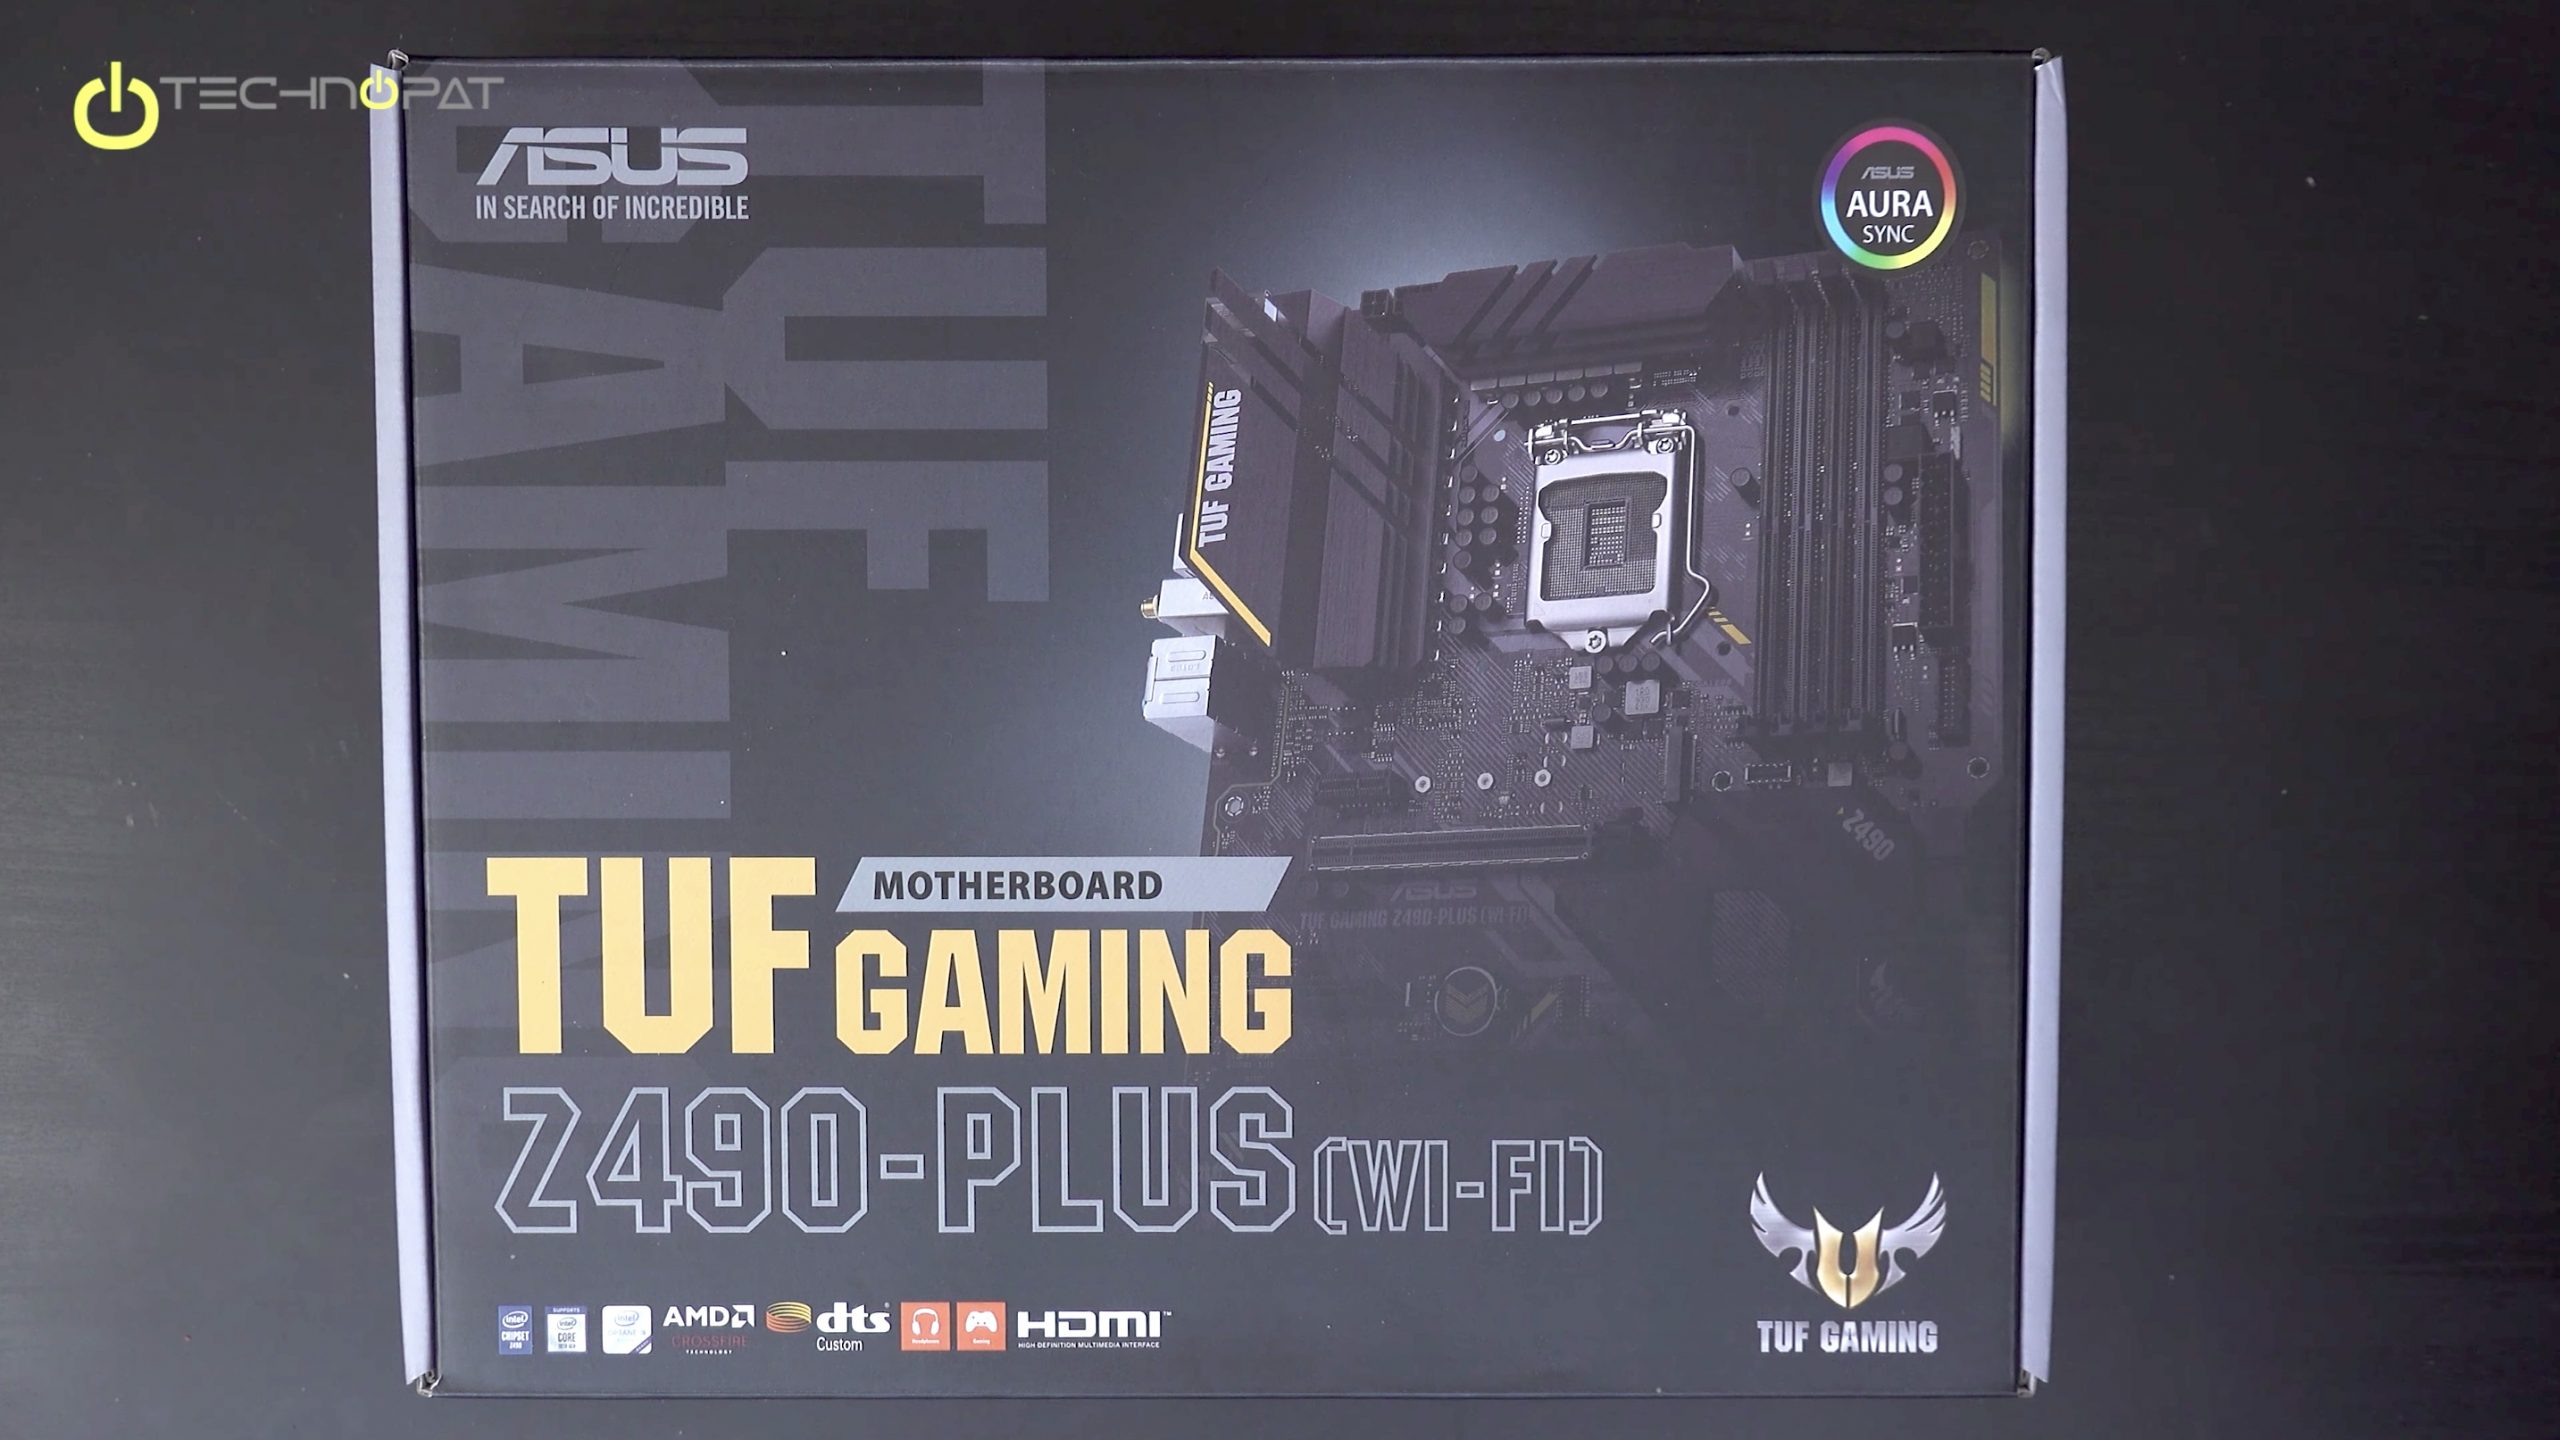 İlk Bakış: ASUS TUF Gaming Z490 PLUS WI-FI - Technopat